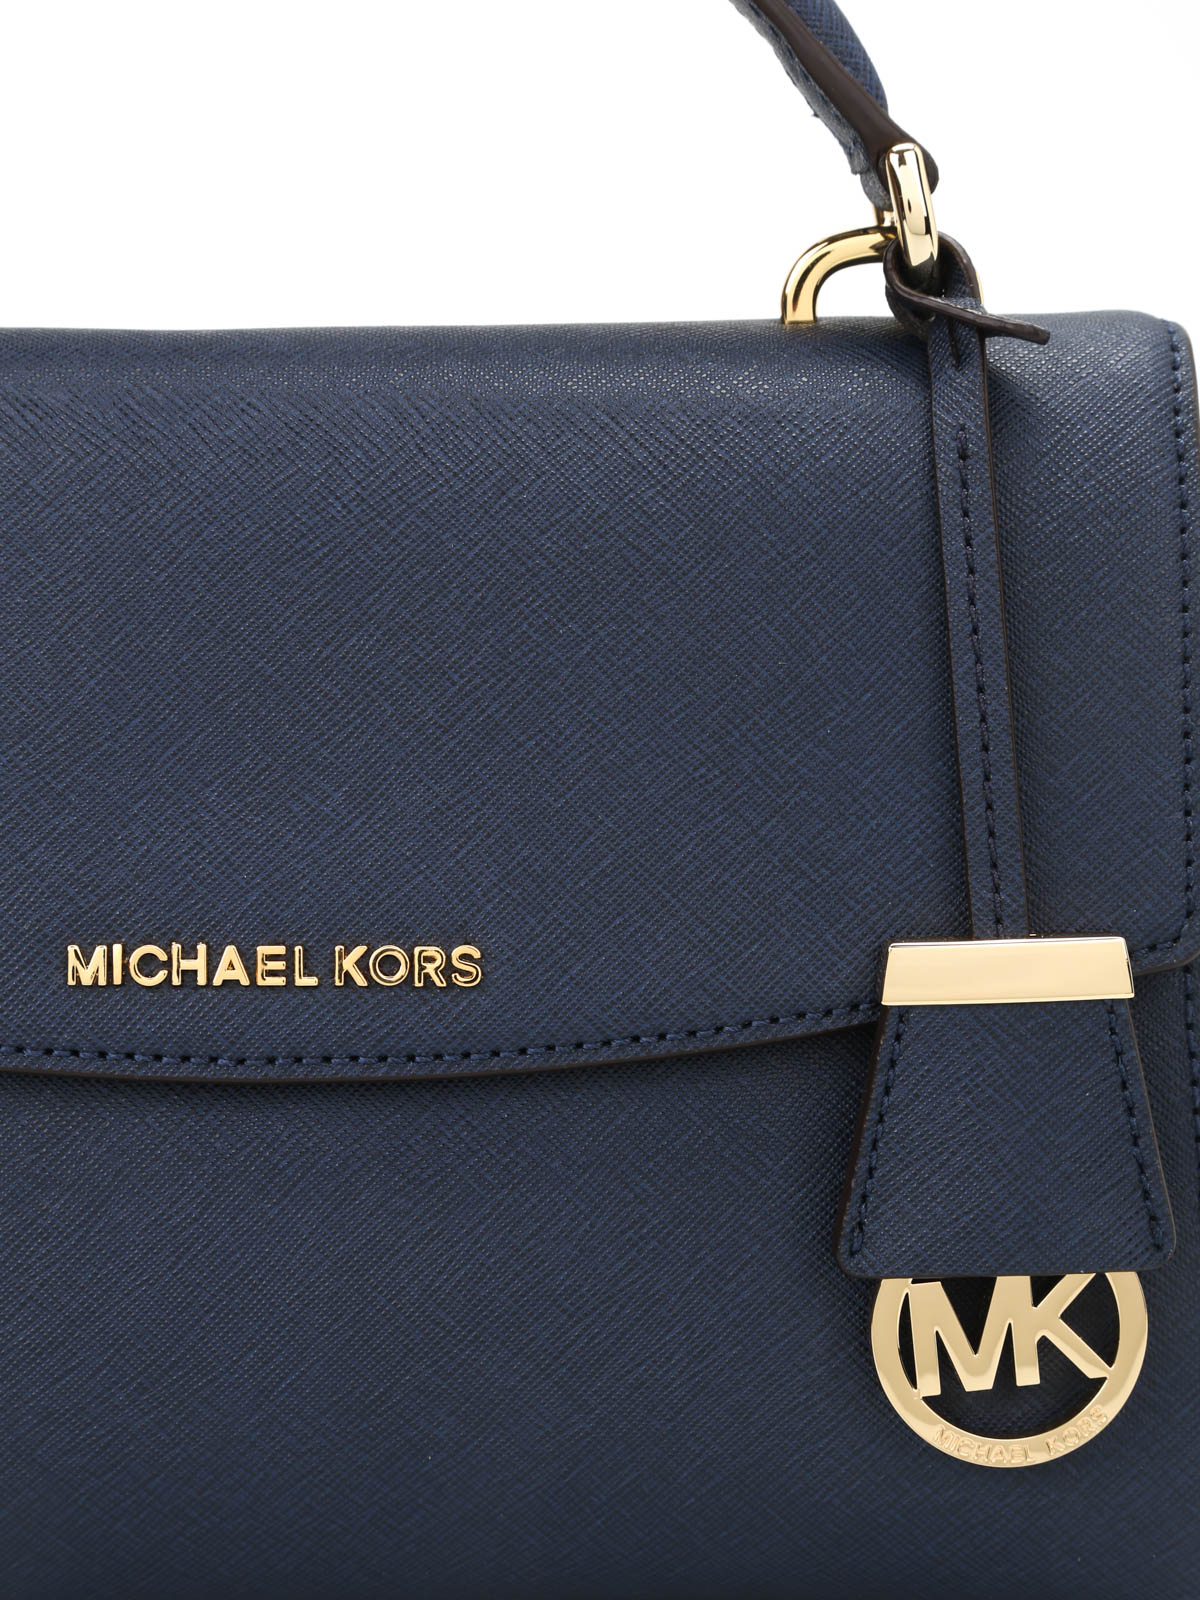 Michael Kors Ava Small Leather Satchel Crossbody